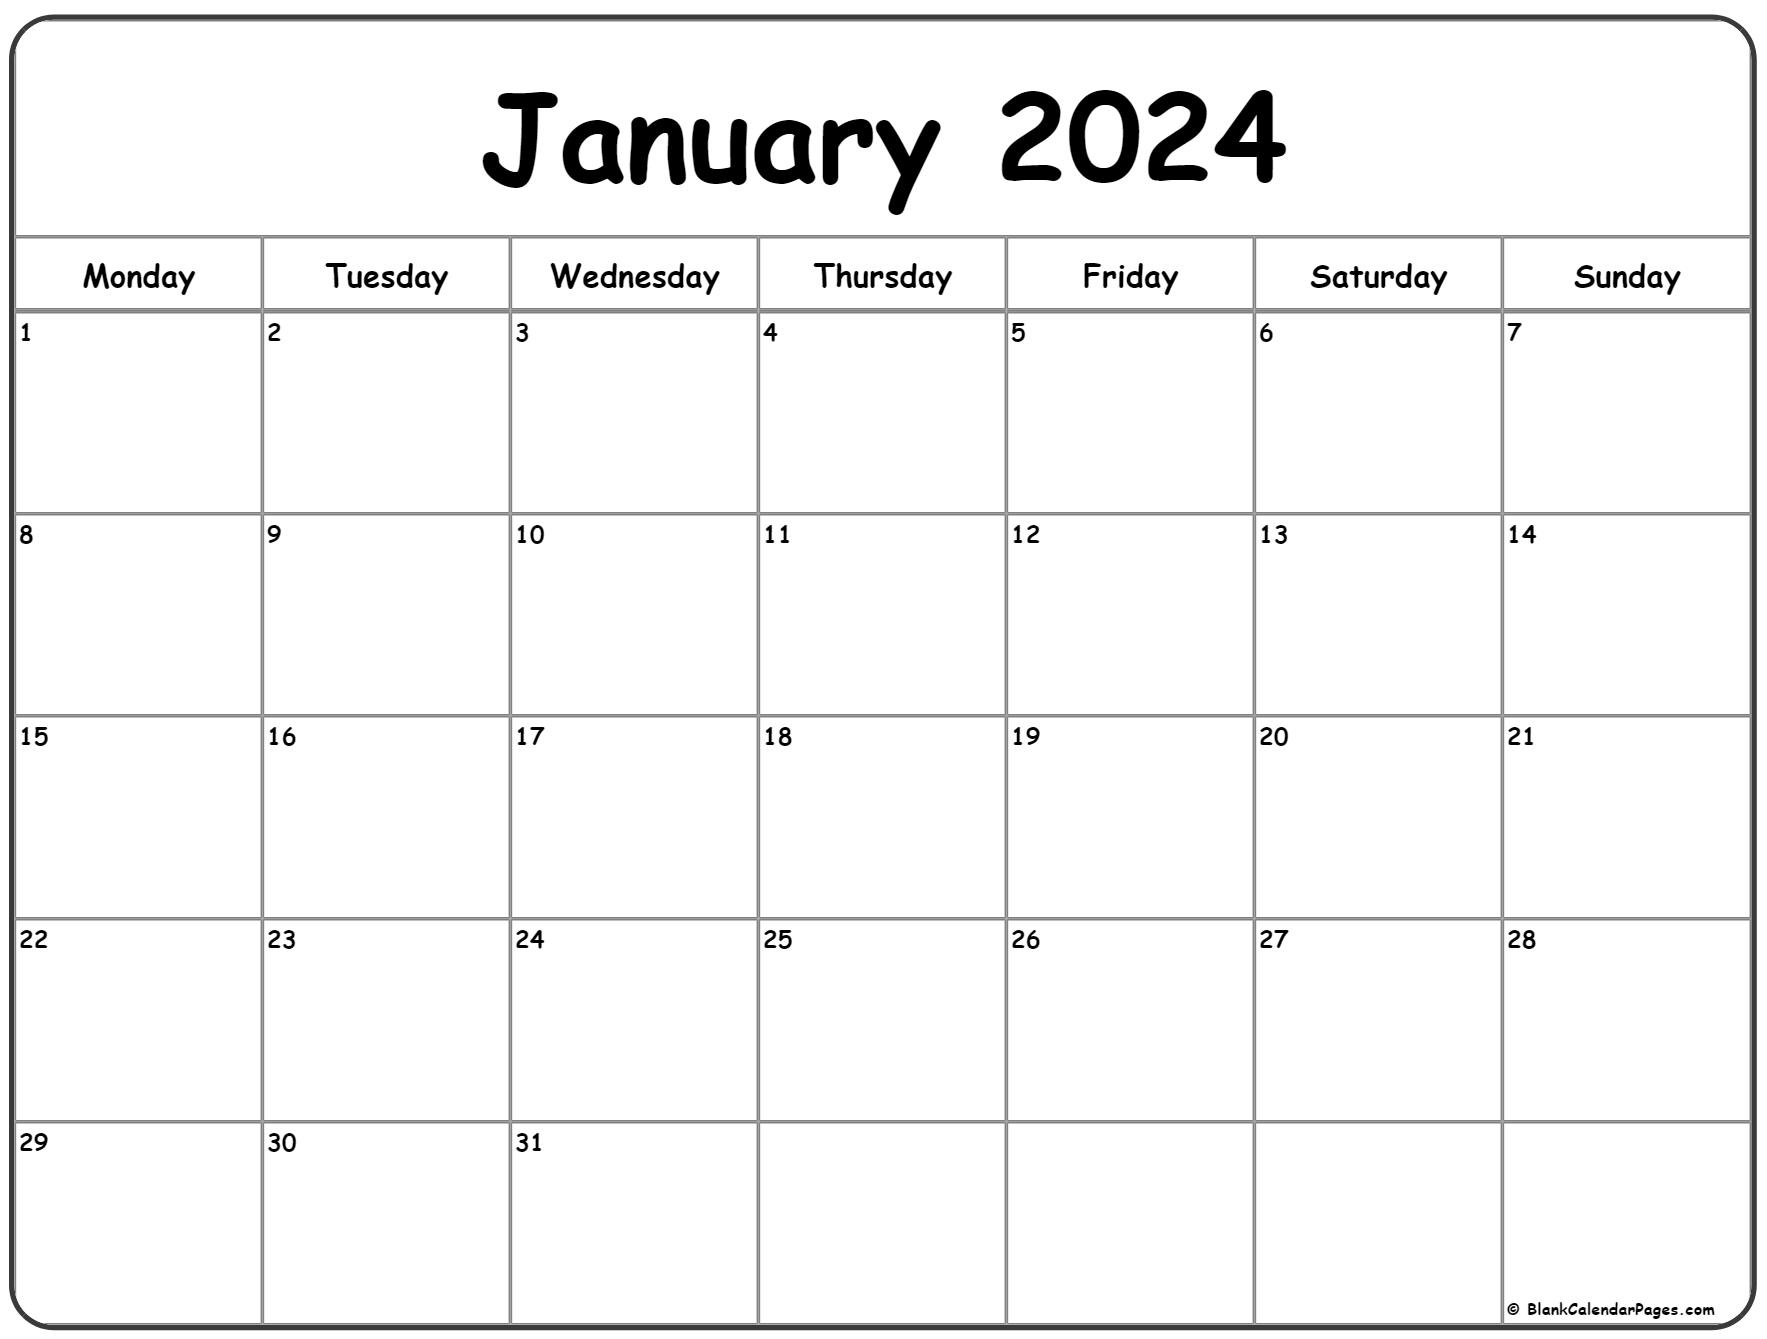 January 2024 Monday Calendar | Monday To Sunday | Printable Calendar 2024 Monday To Sunday